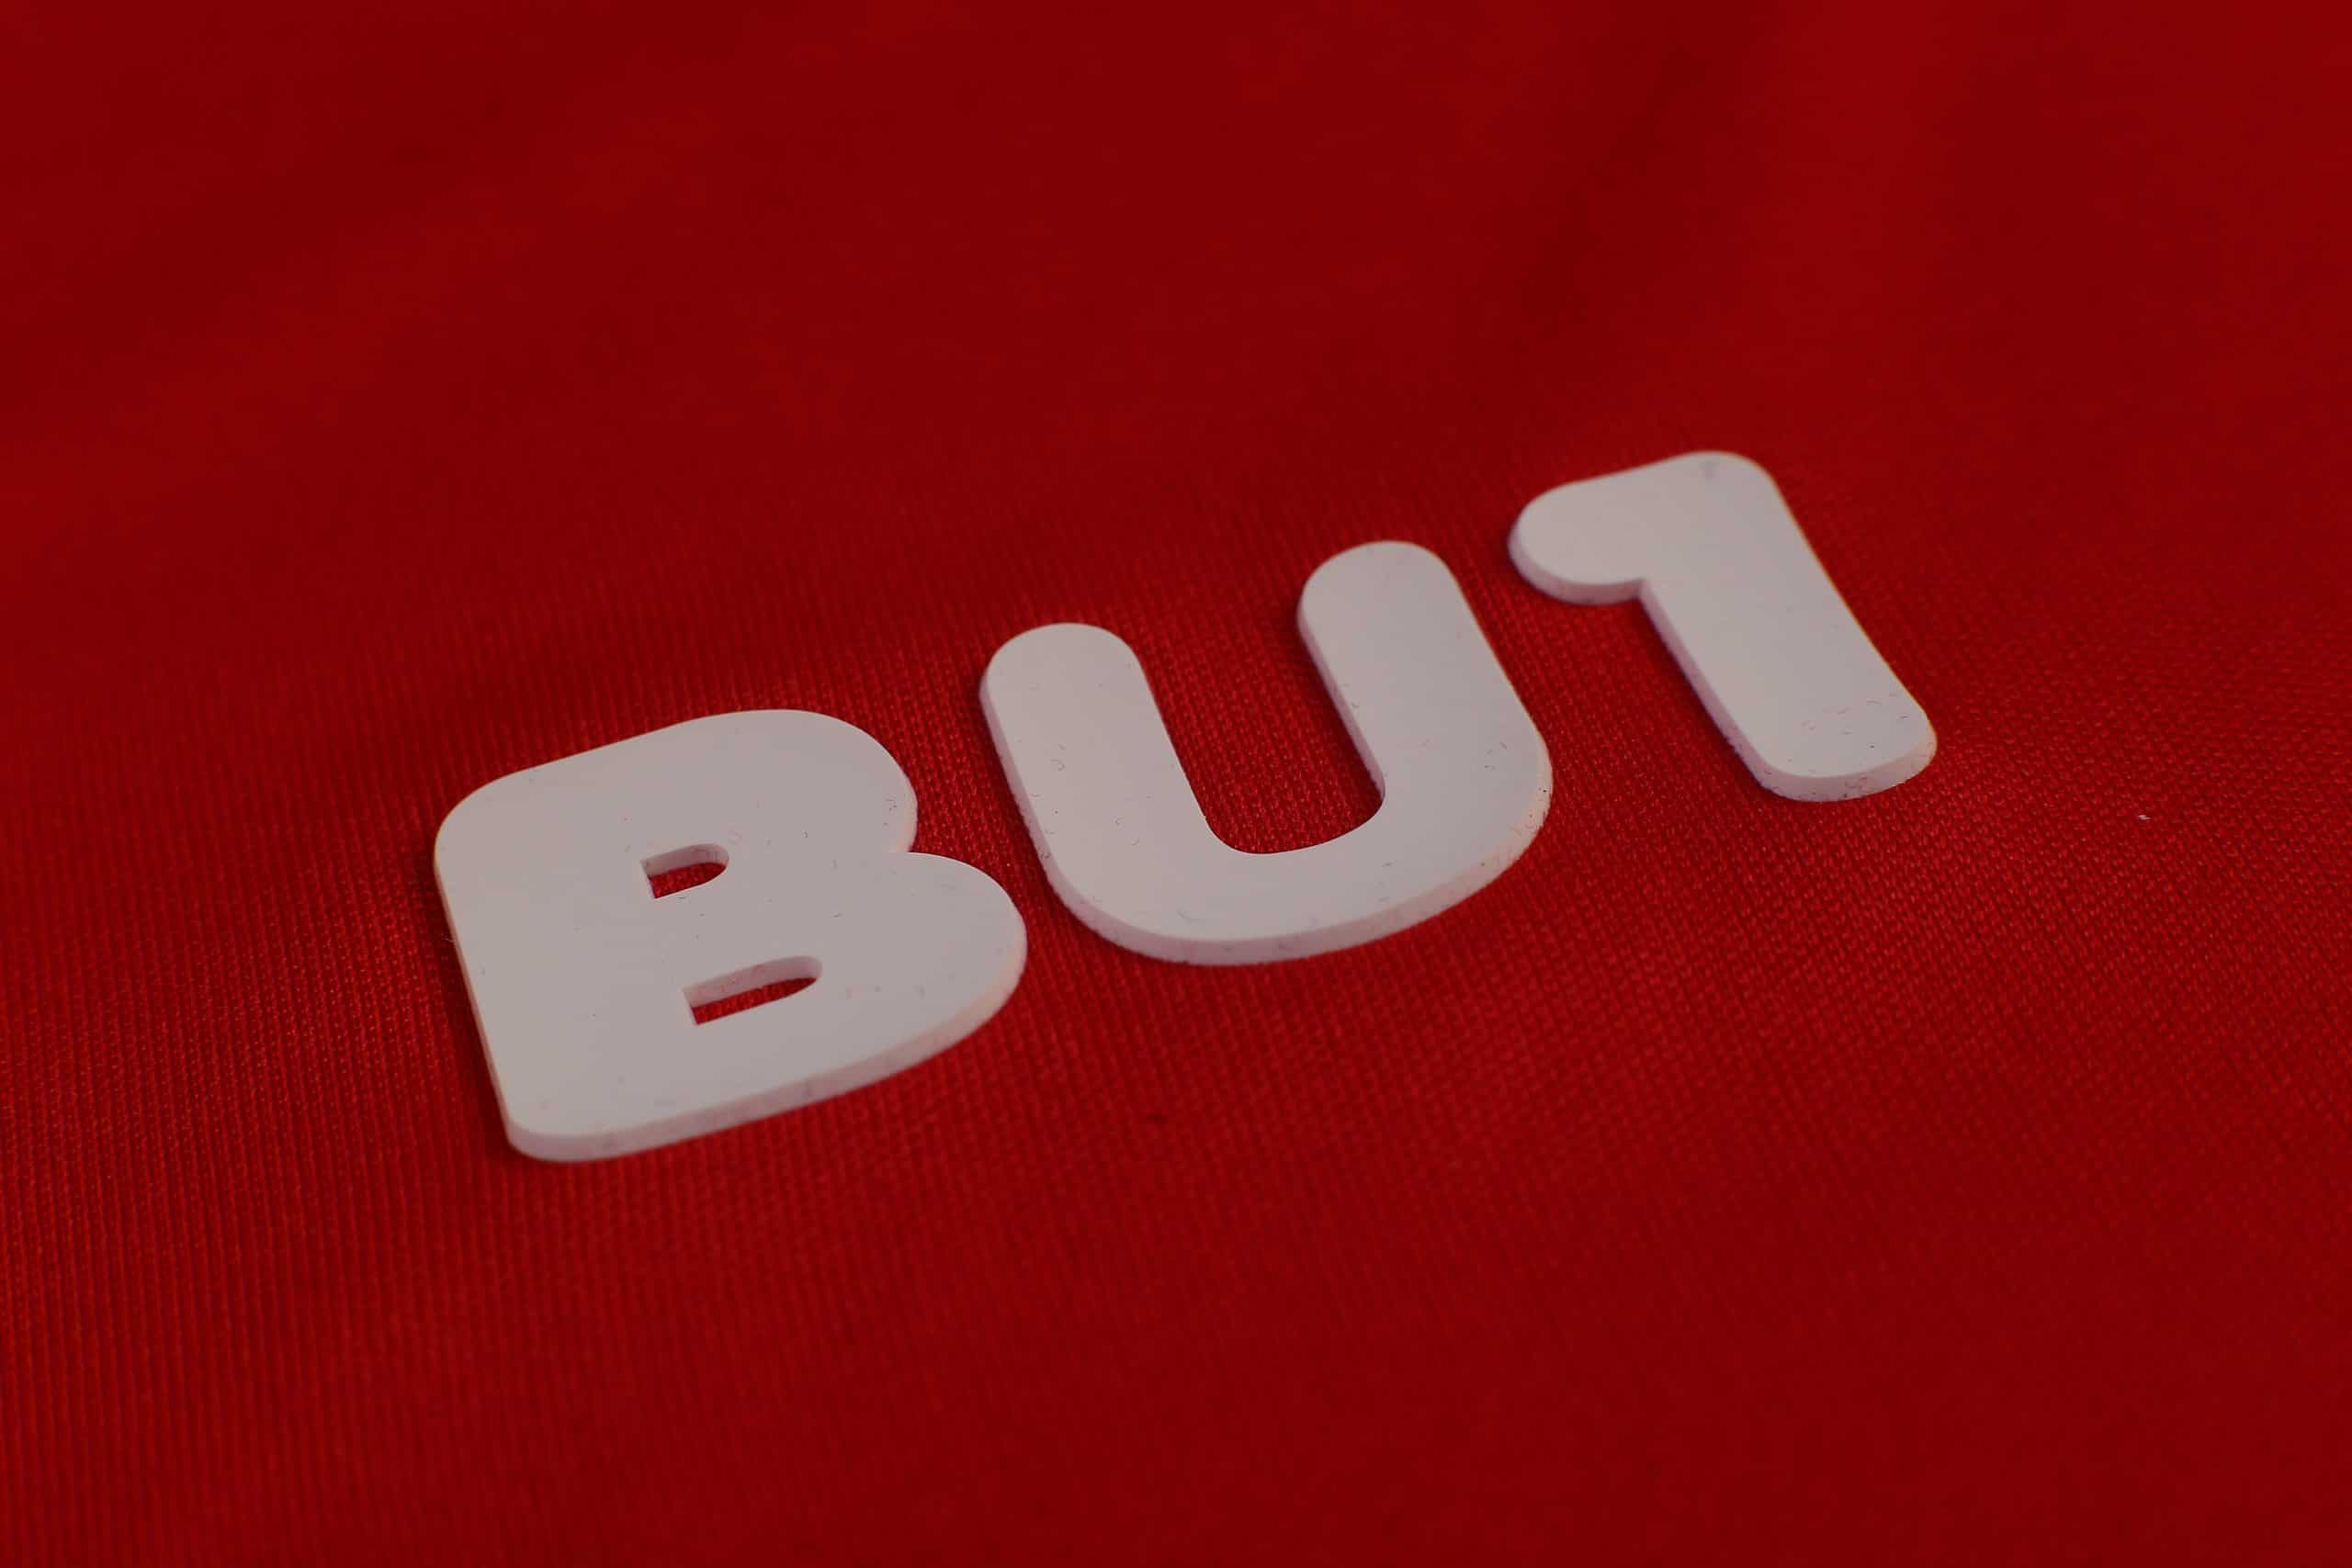 BU1 jersey 20 red